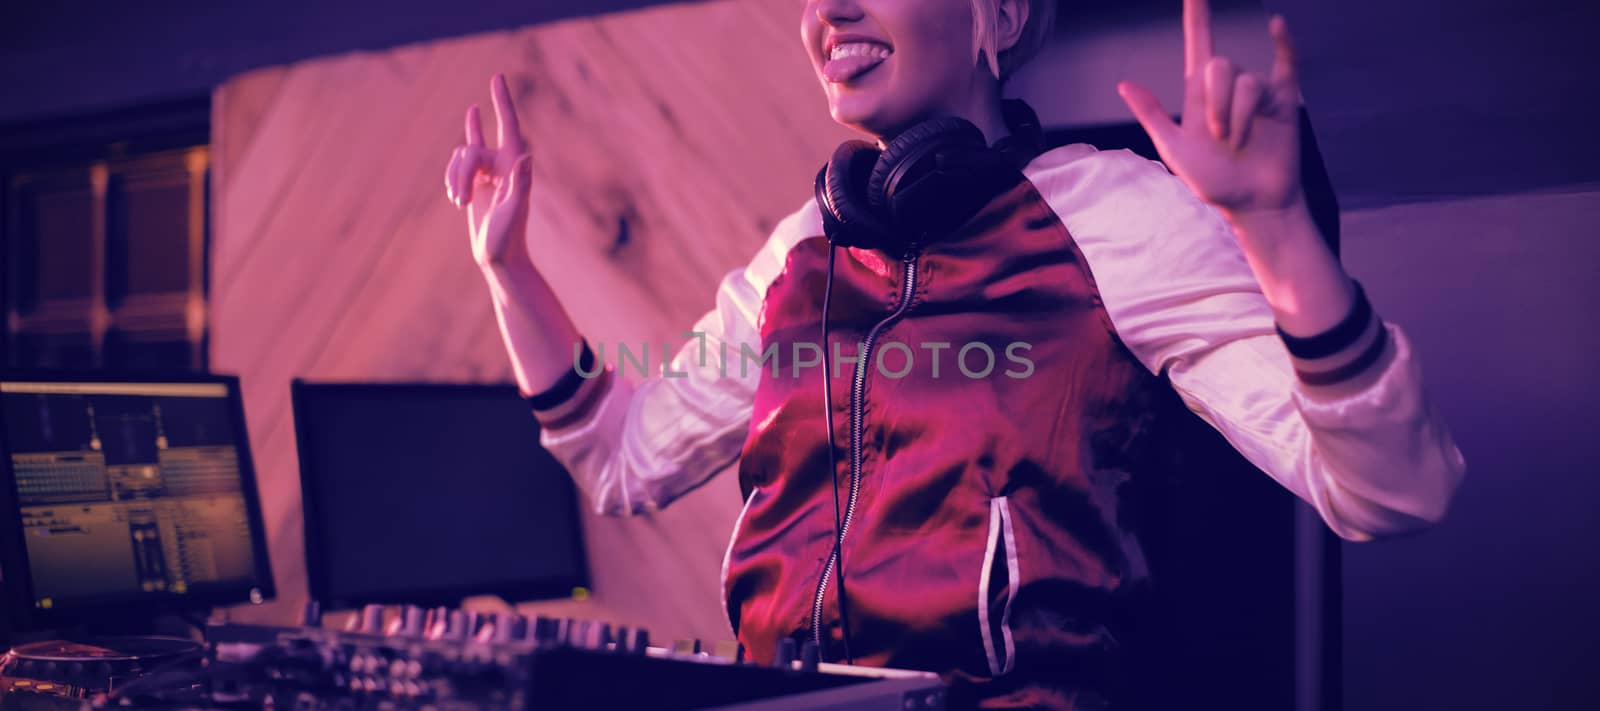 Female dj having fun while playing music in bar by Wavebreakmedia